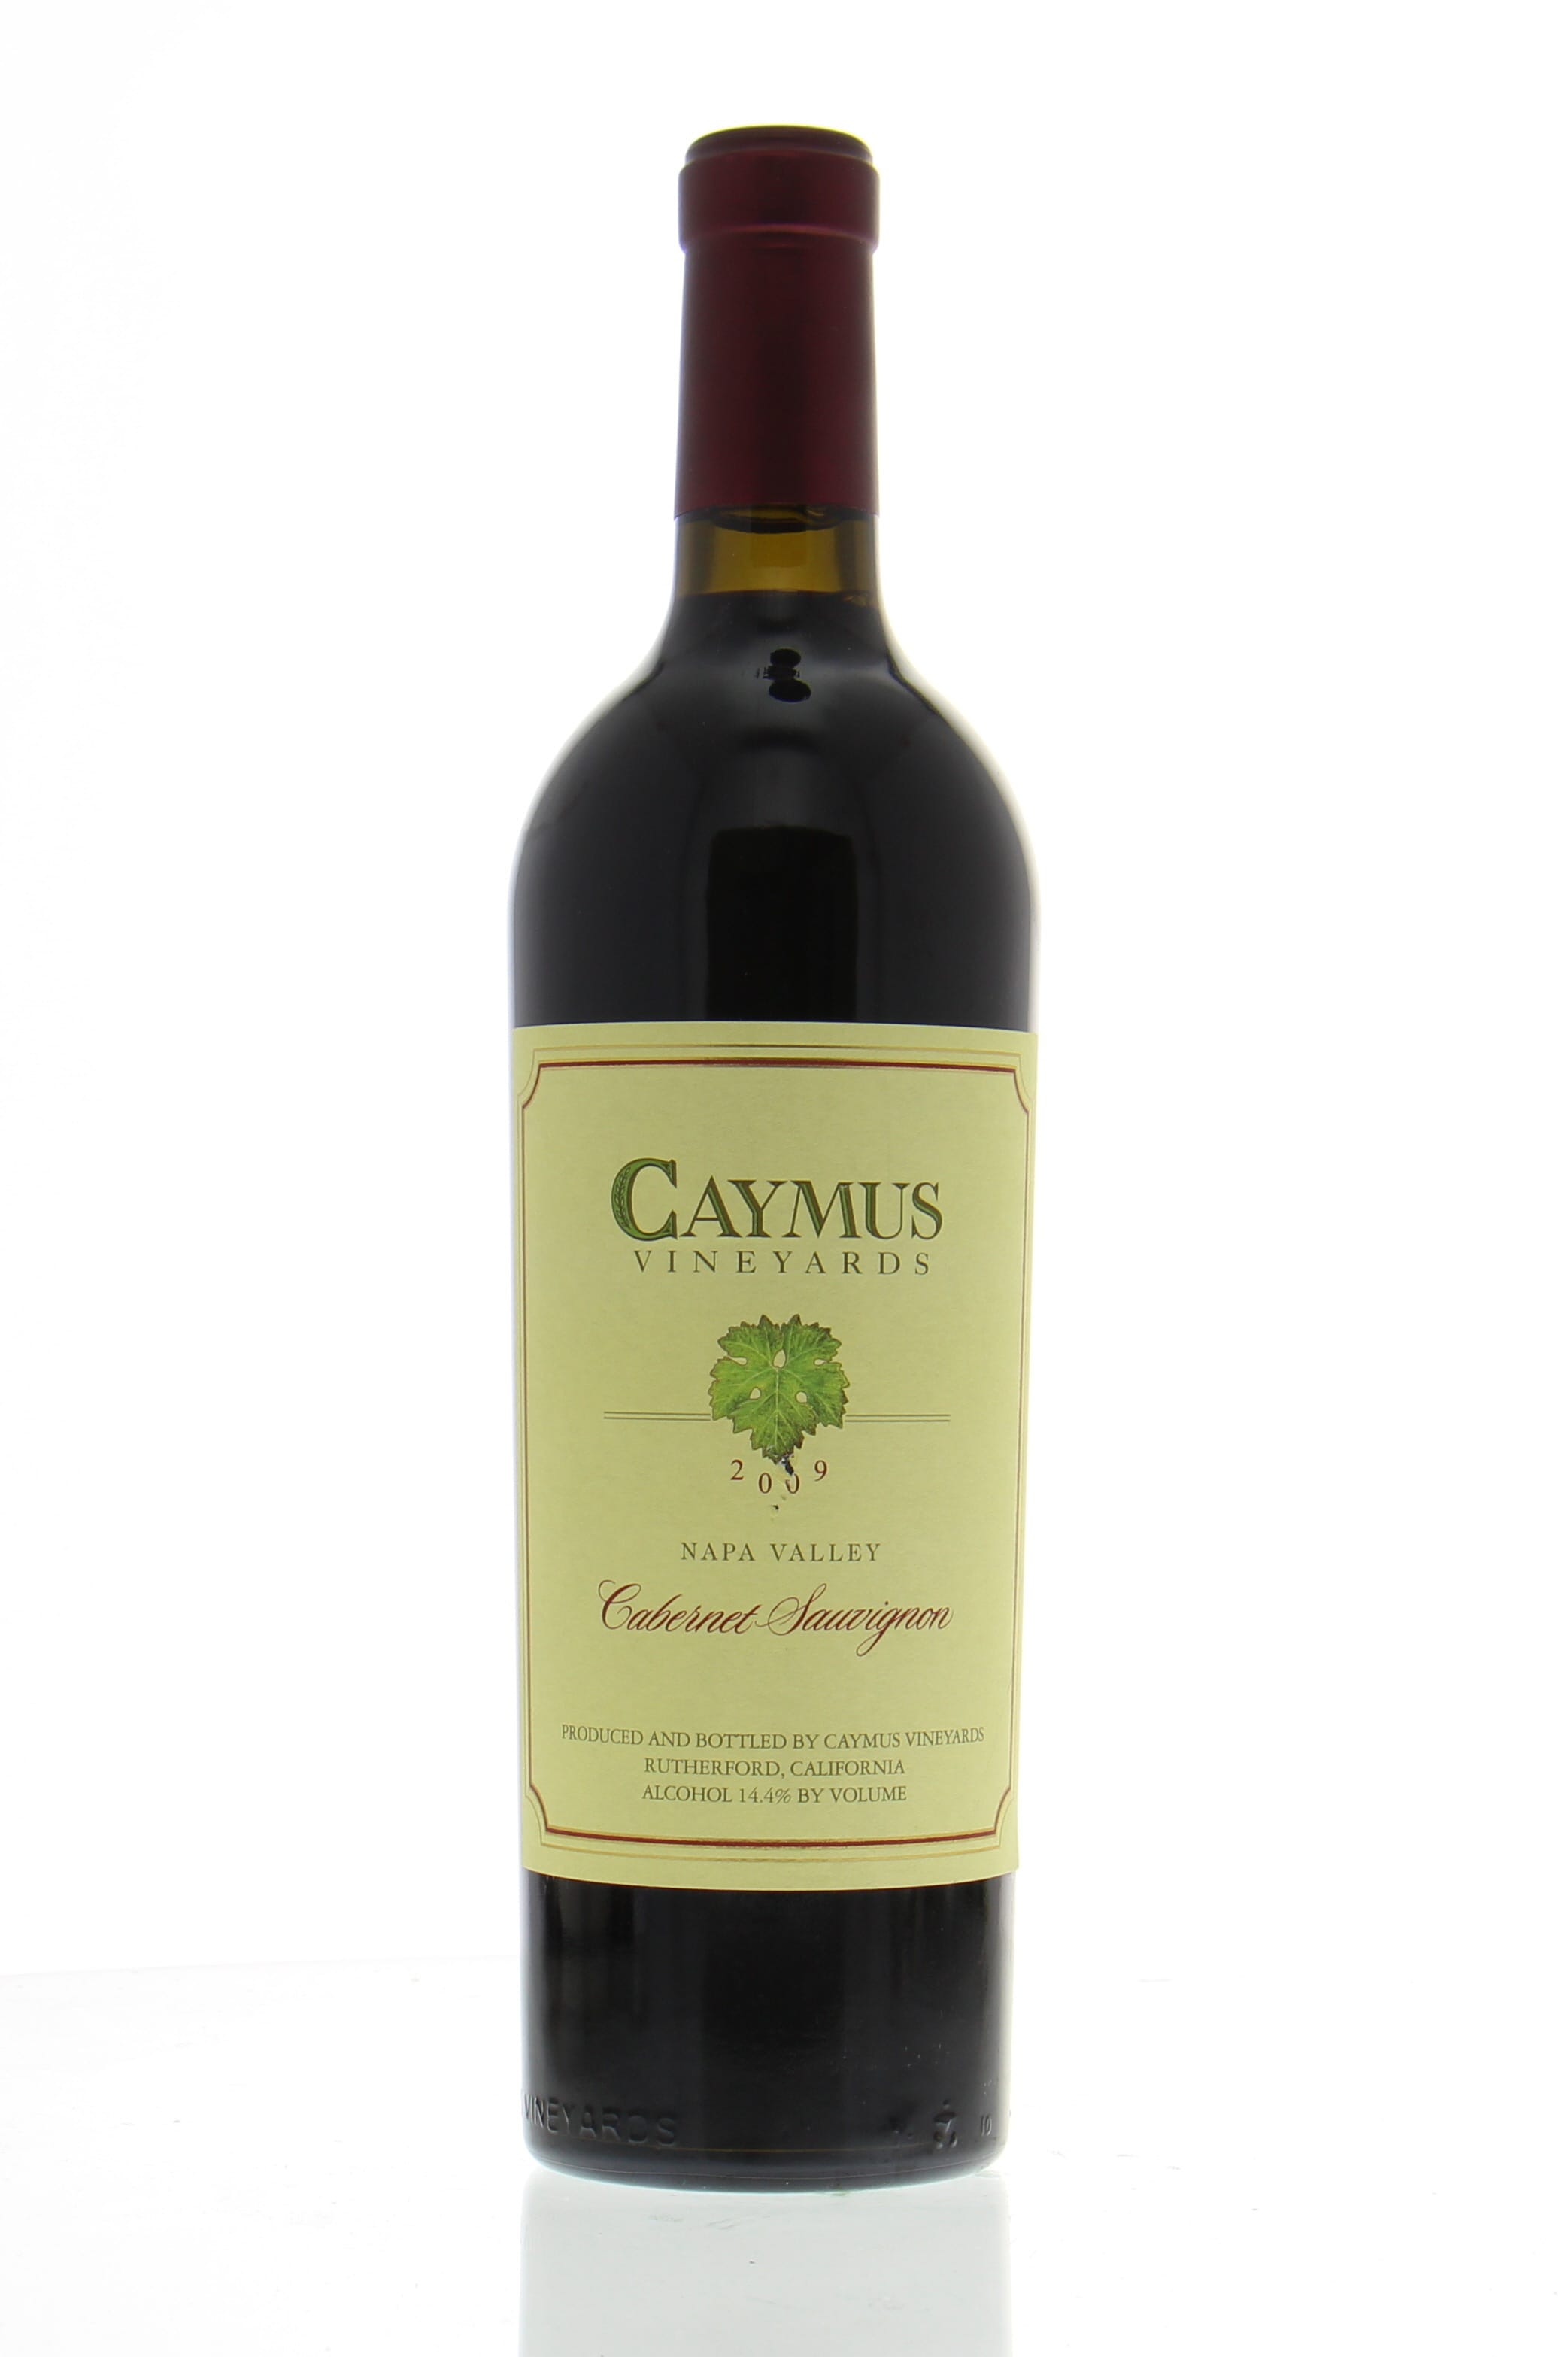 Caymus - Cabernet Sauvignon 2009 From Original Wooden Case